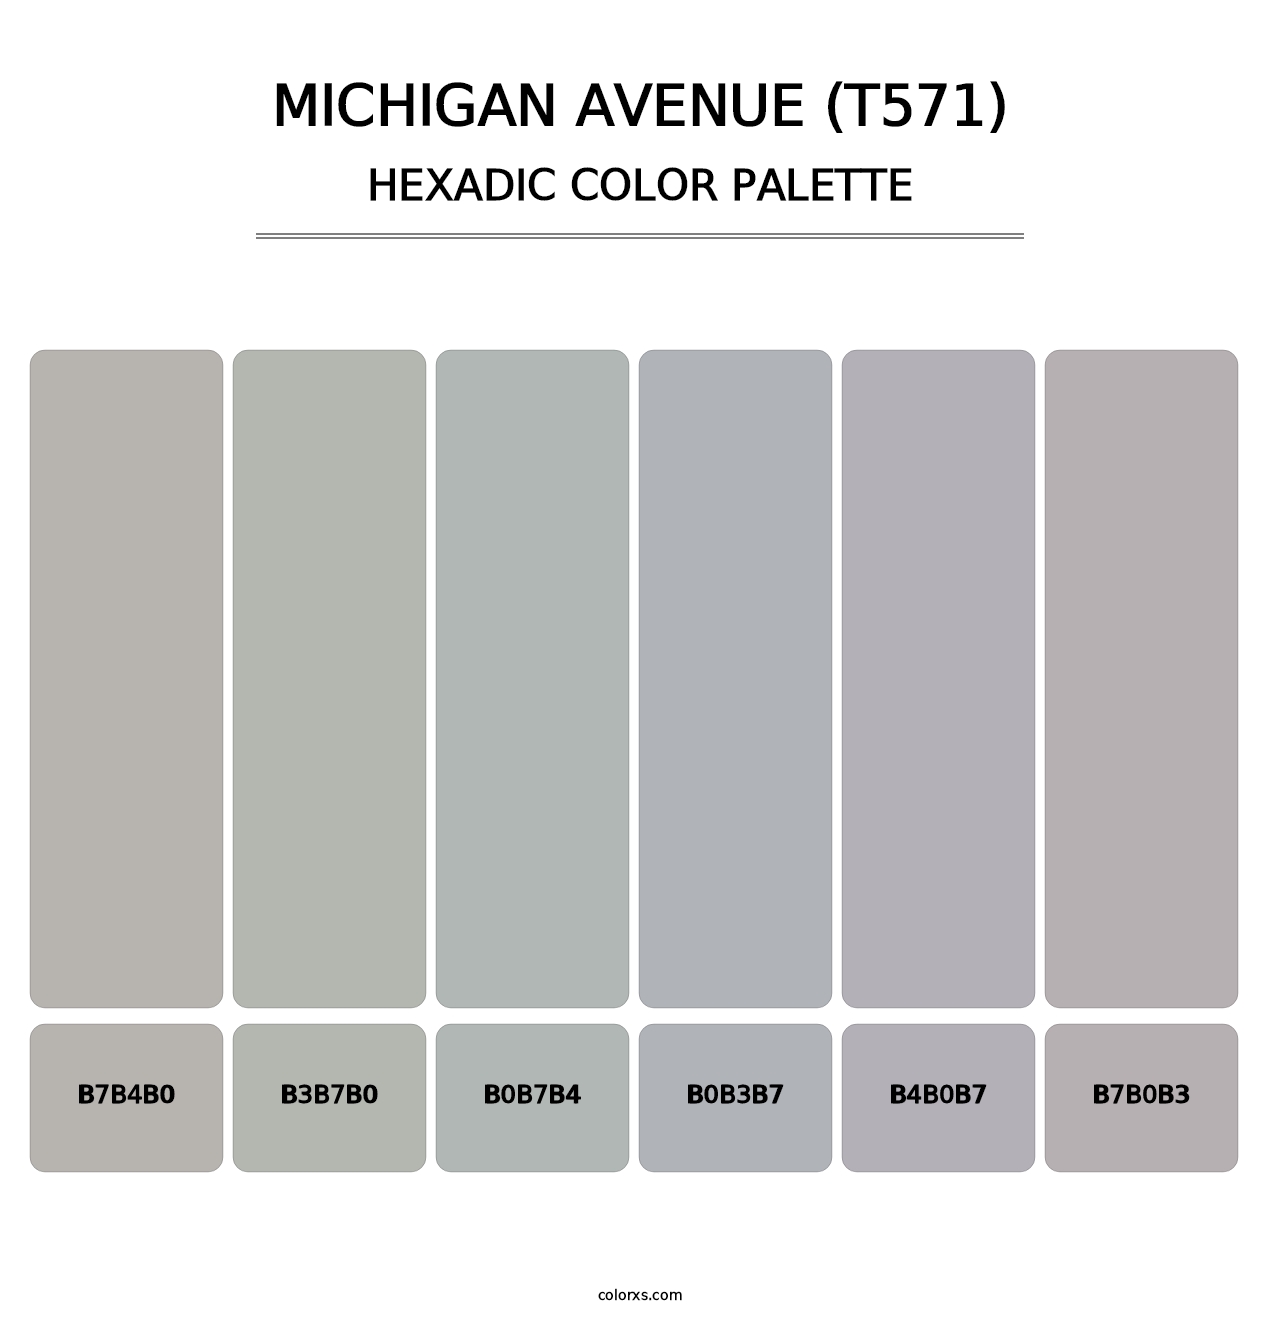 Michigan Avenue (T571) - Hexadic Color Palette